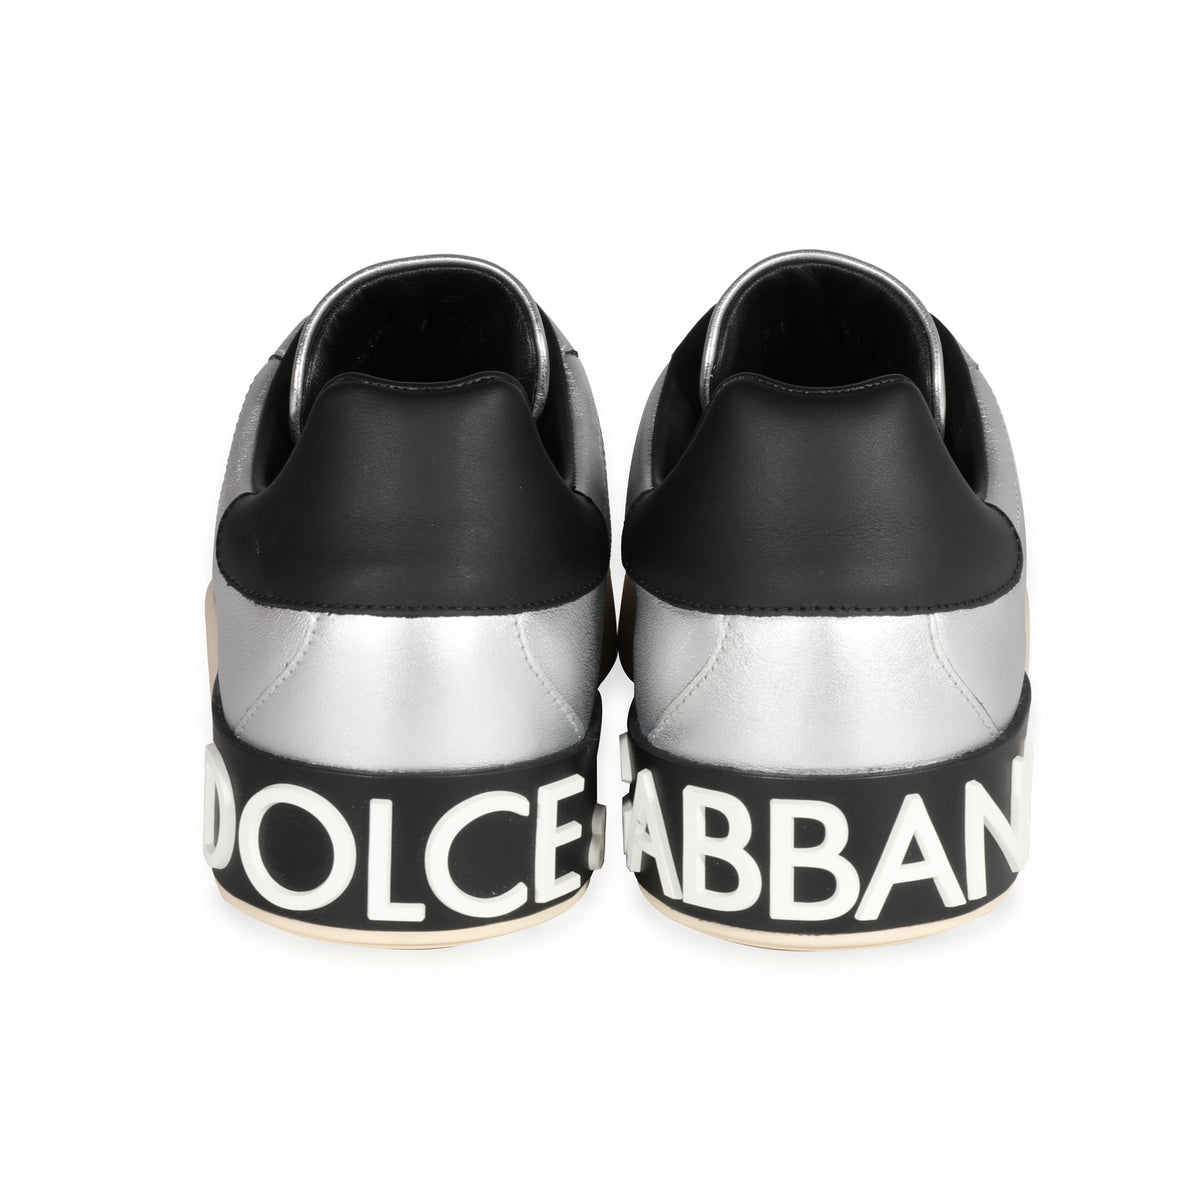 Dolce & Gabbana -  Dolce & Gabbana Portofino 'Silver' (41 EUR)